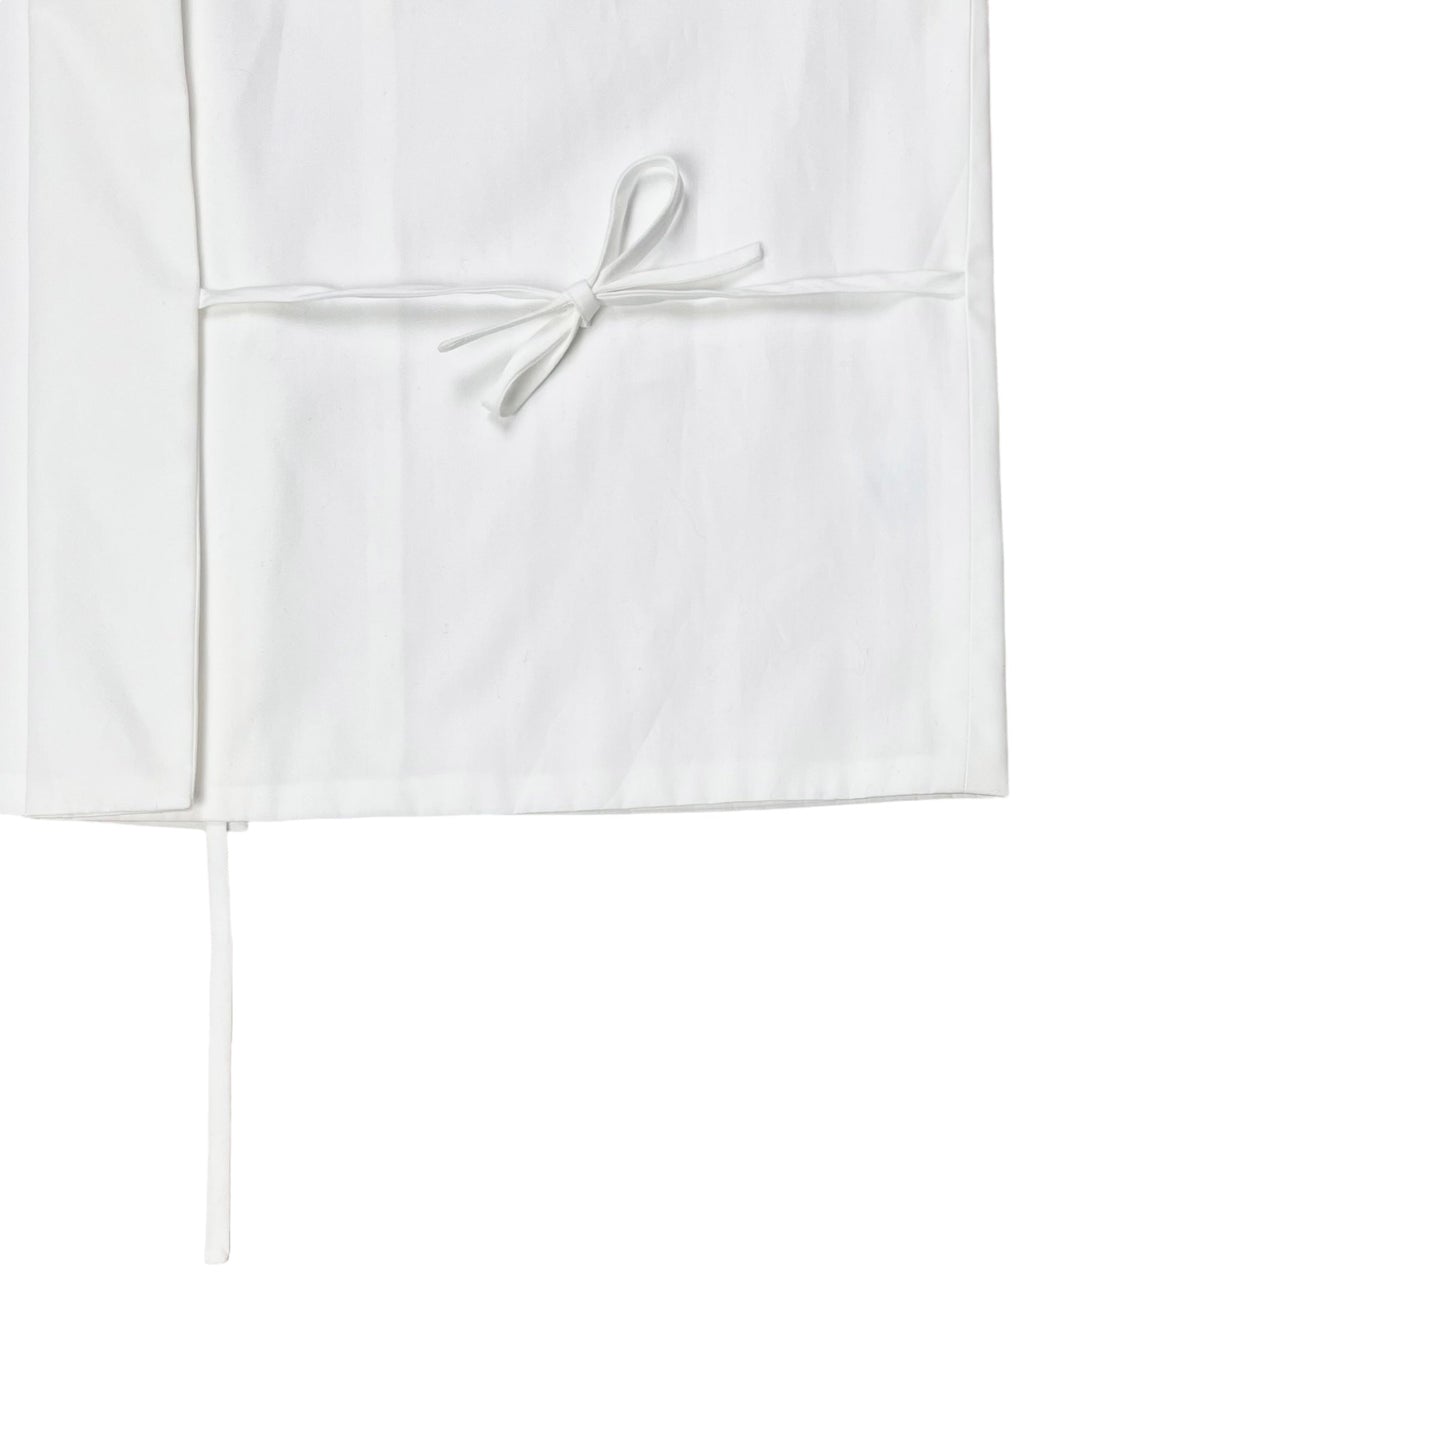 Dries Van Noten Calta Wrap Shirt White - SS17